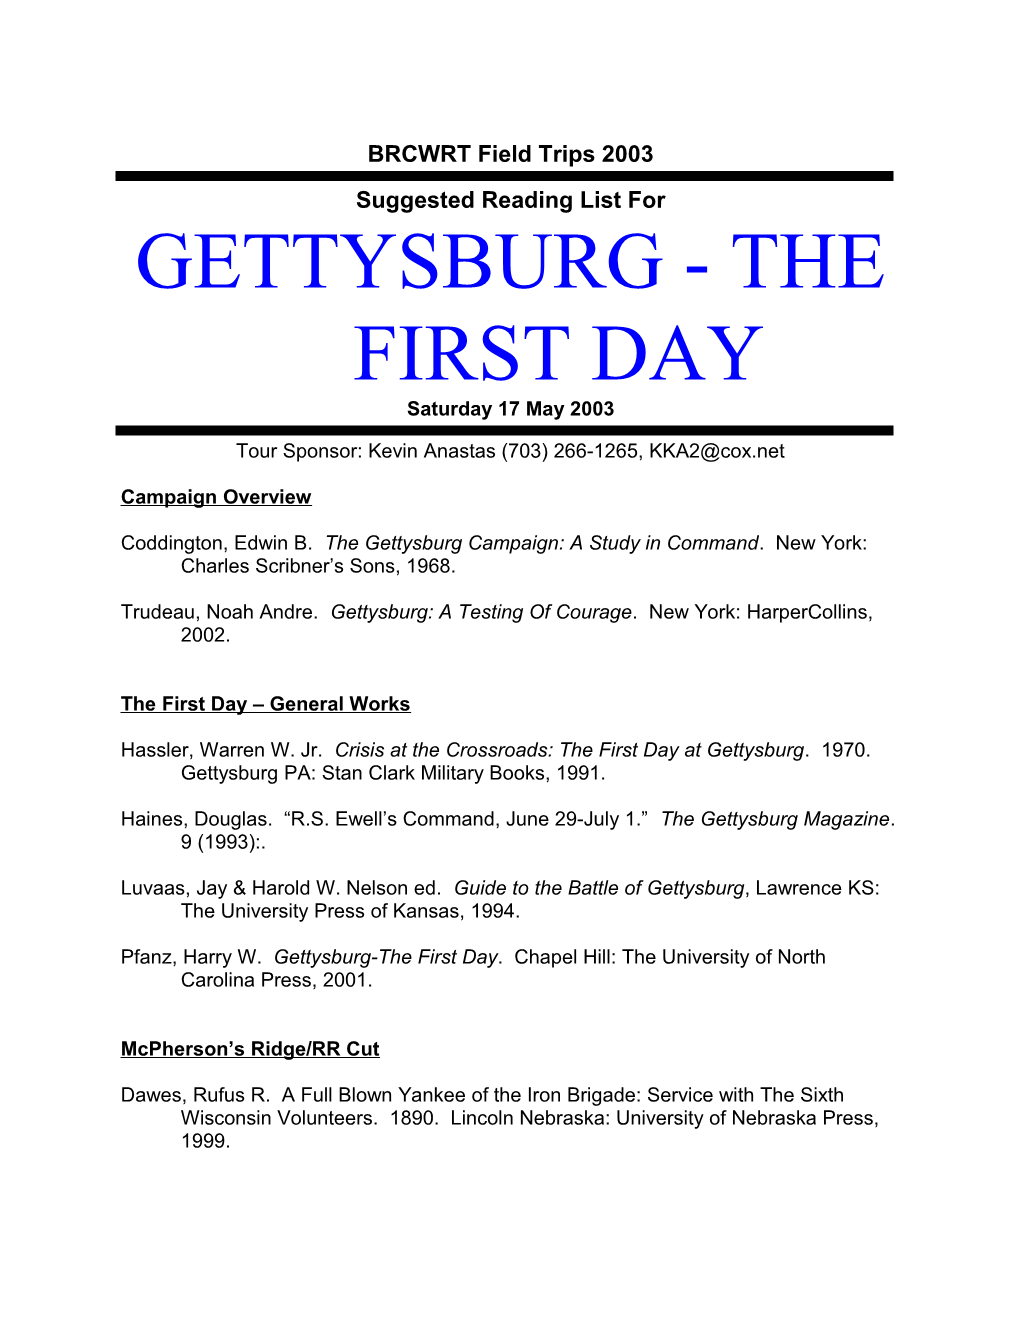 Gettysburg BRCWRT Trip 23-24 Oct 99